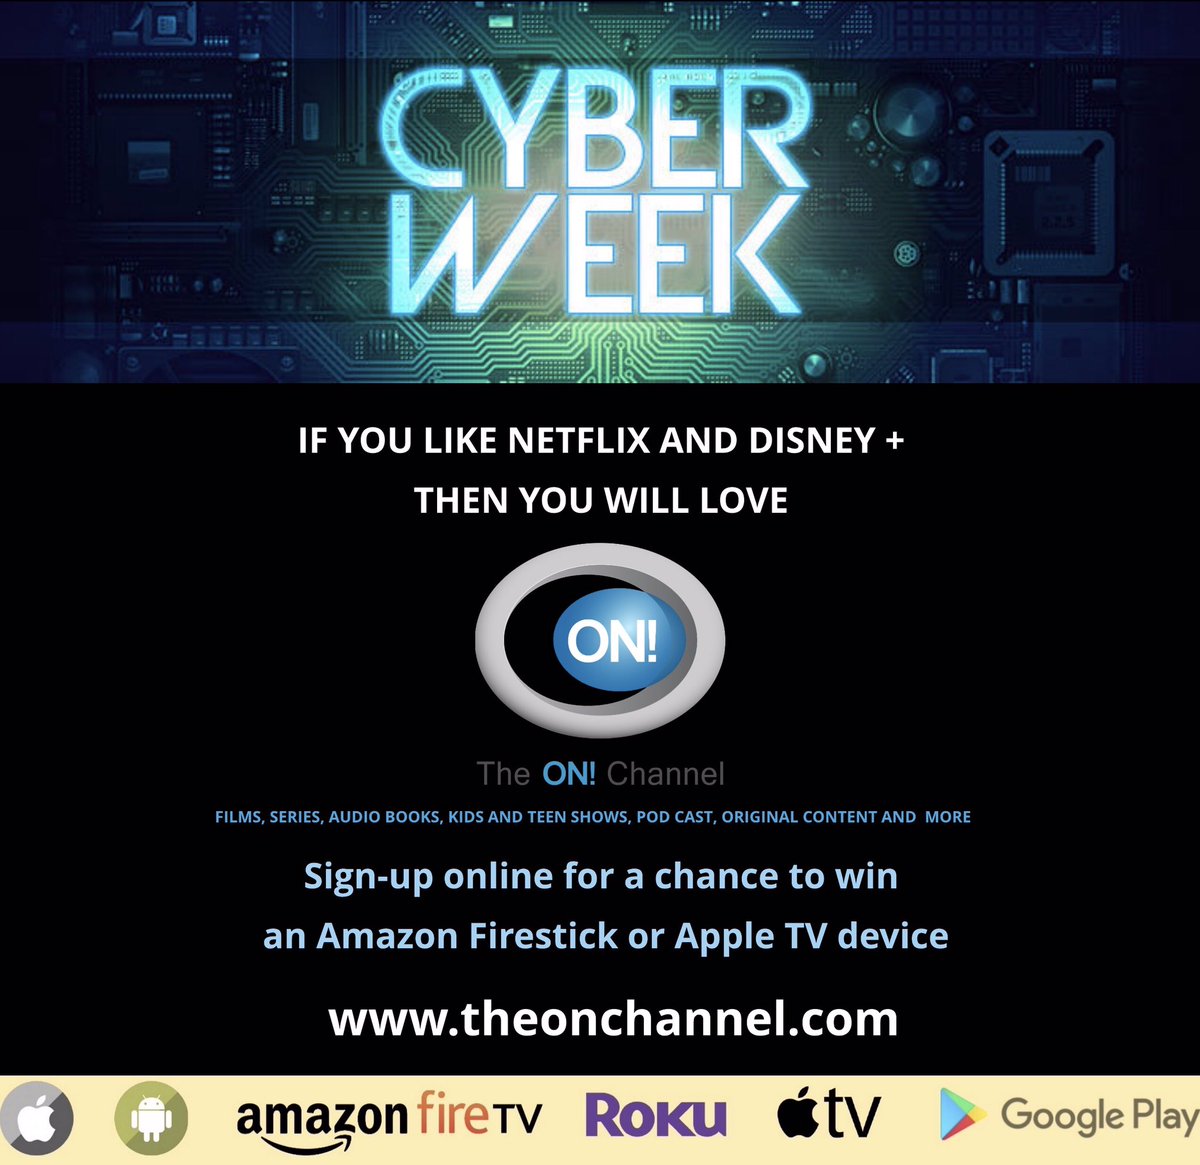 Try us this cyber week!!! #cybermonday #cyberweek #cyber #monday #week #try #us #new #dontmissout #tryitnow #streaming #neflix #disney #marvel #hbo #starzpower #sale